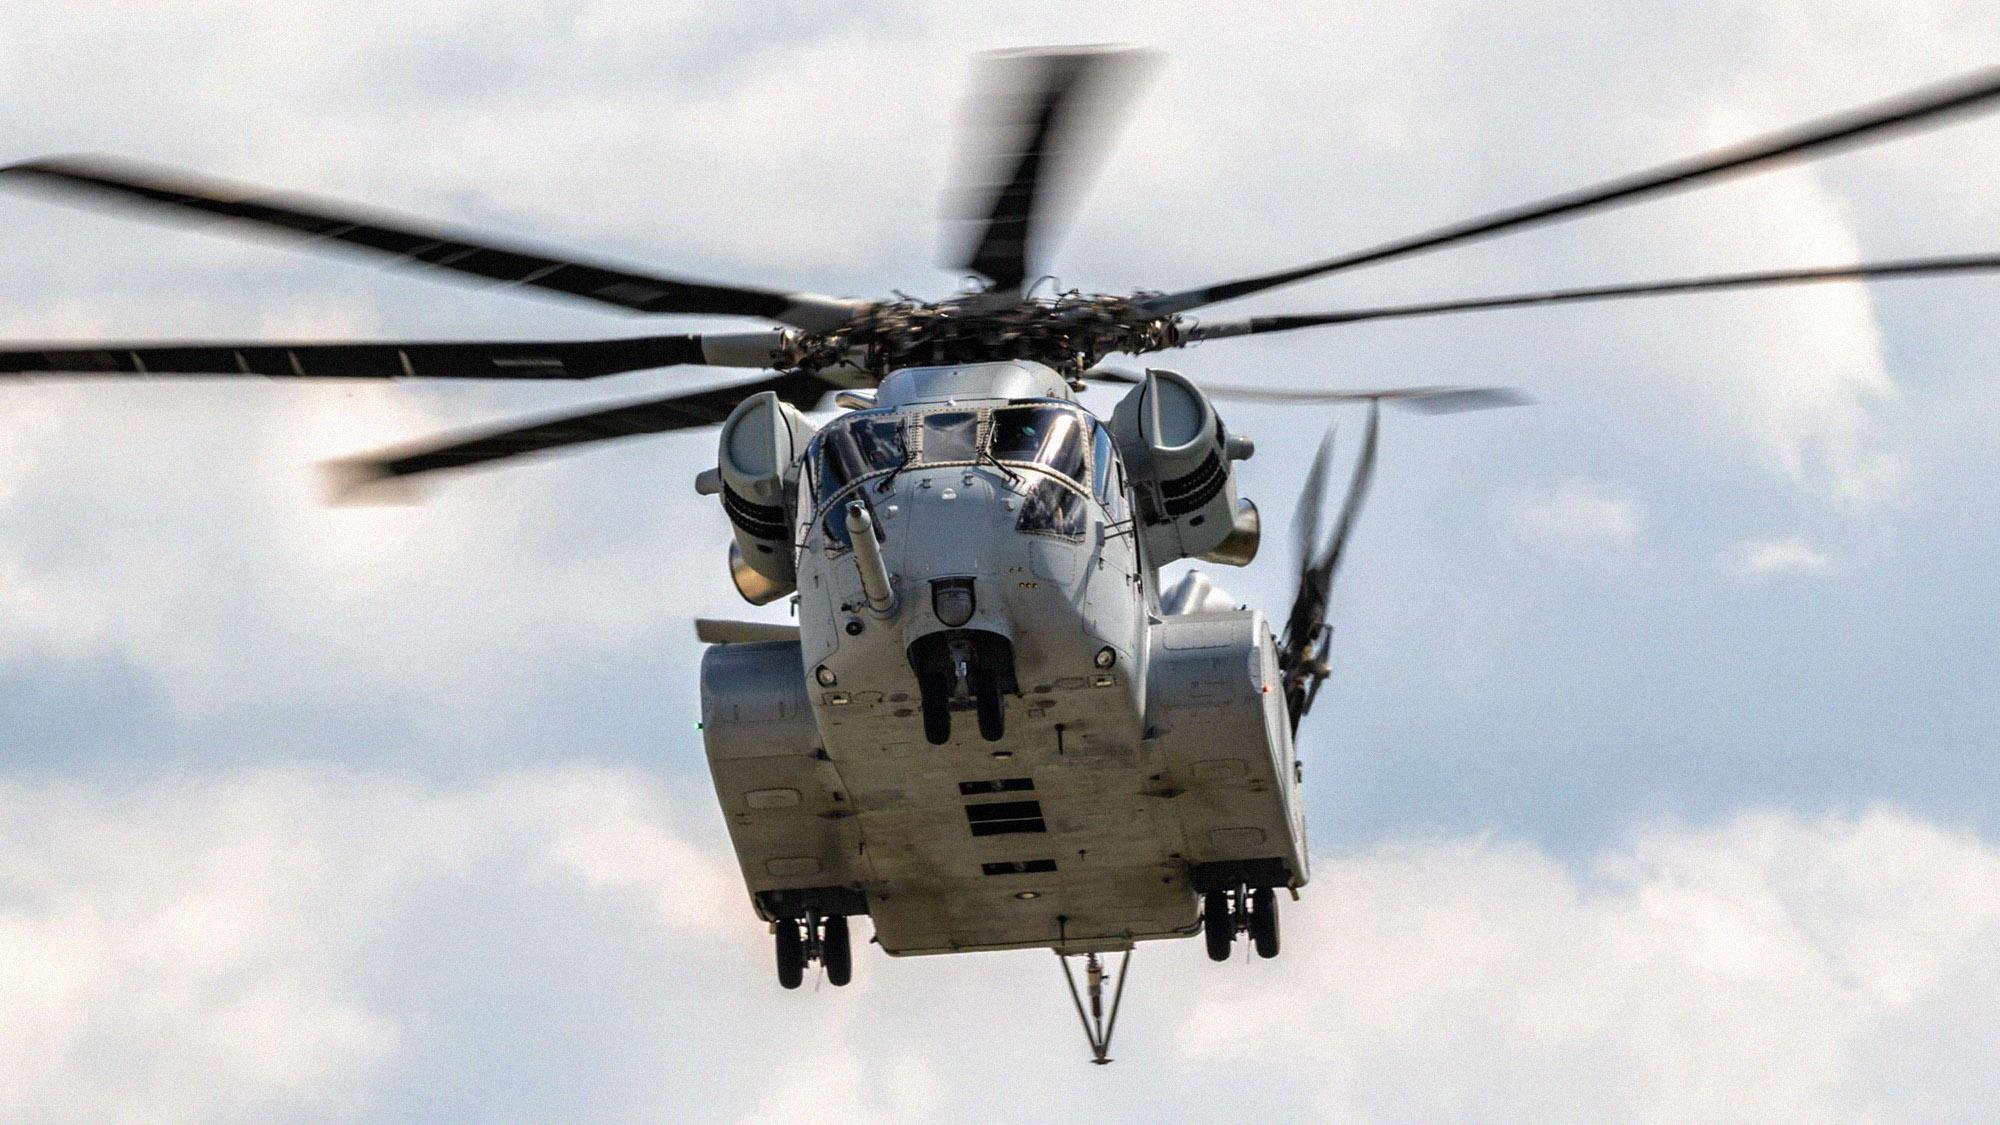 Developing CH-53K simulator controls for NAVAIR